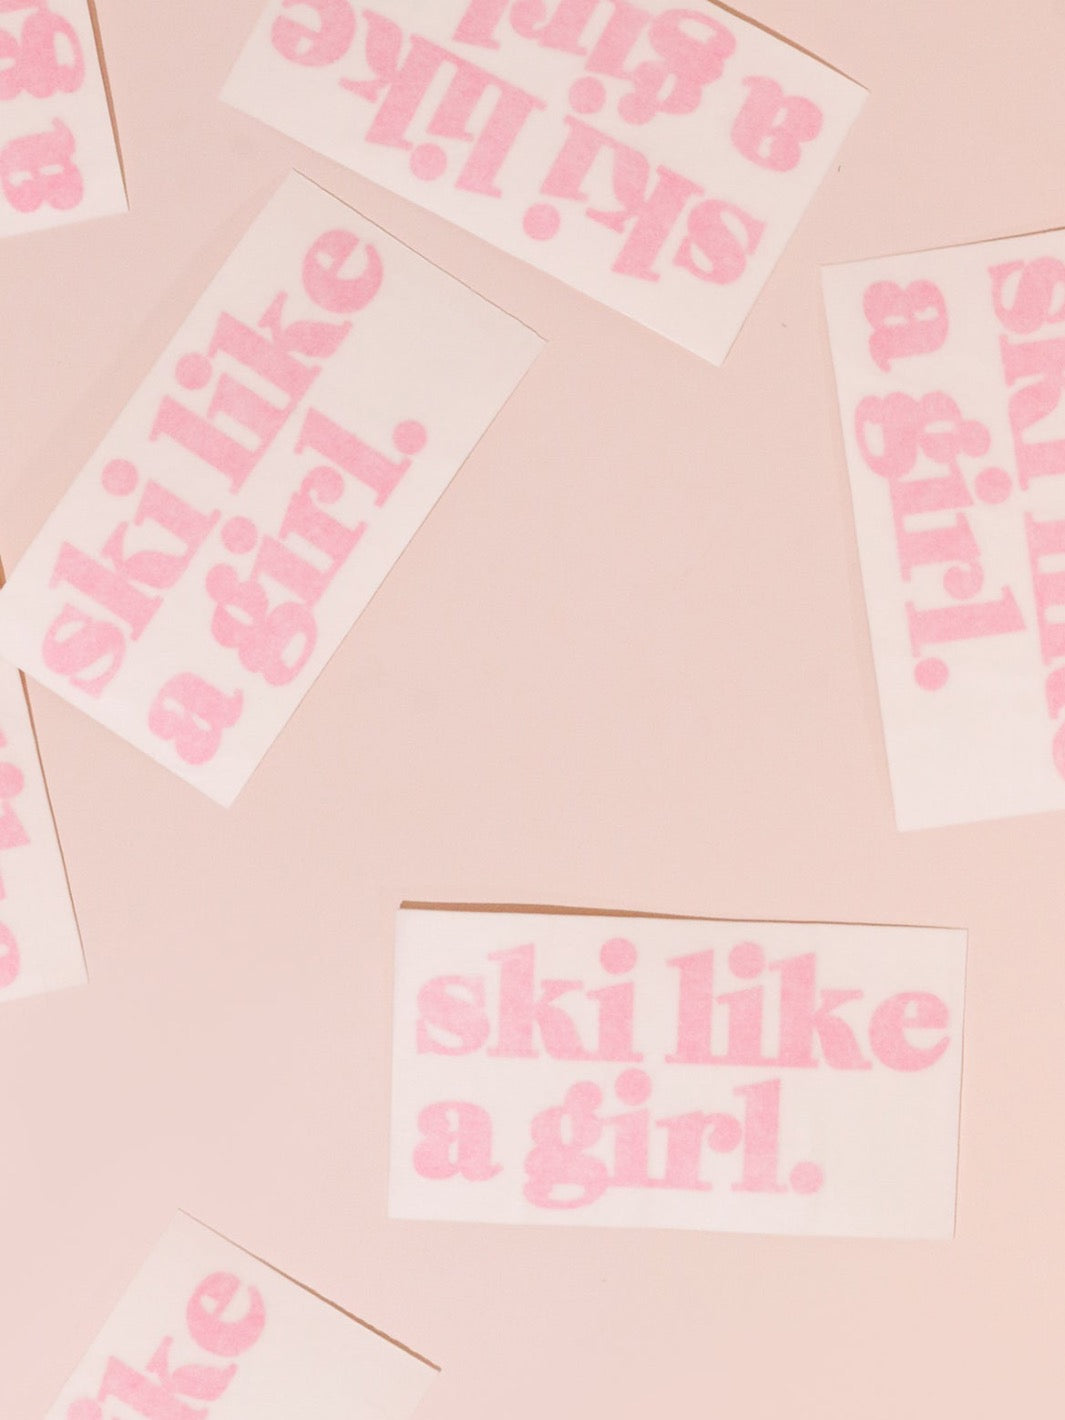 Ski Like A Girl Sticker Holographic Glitter (5” or 3)